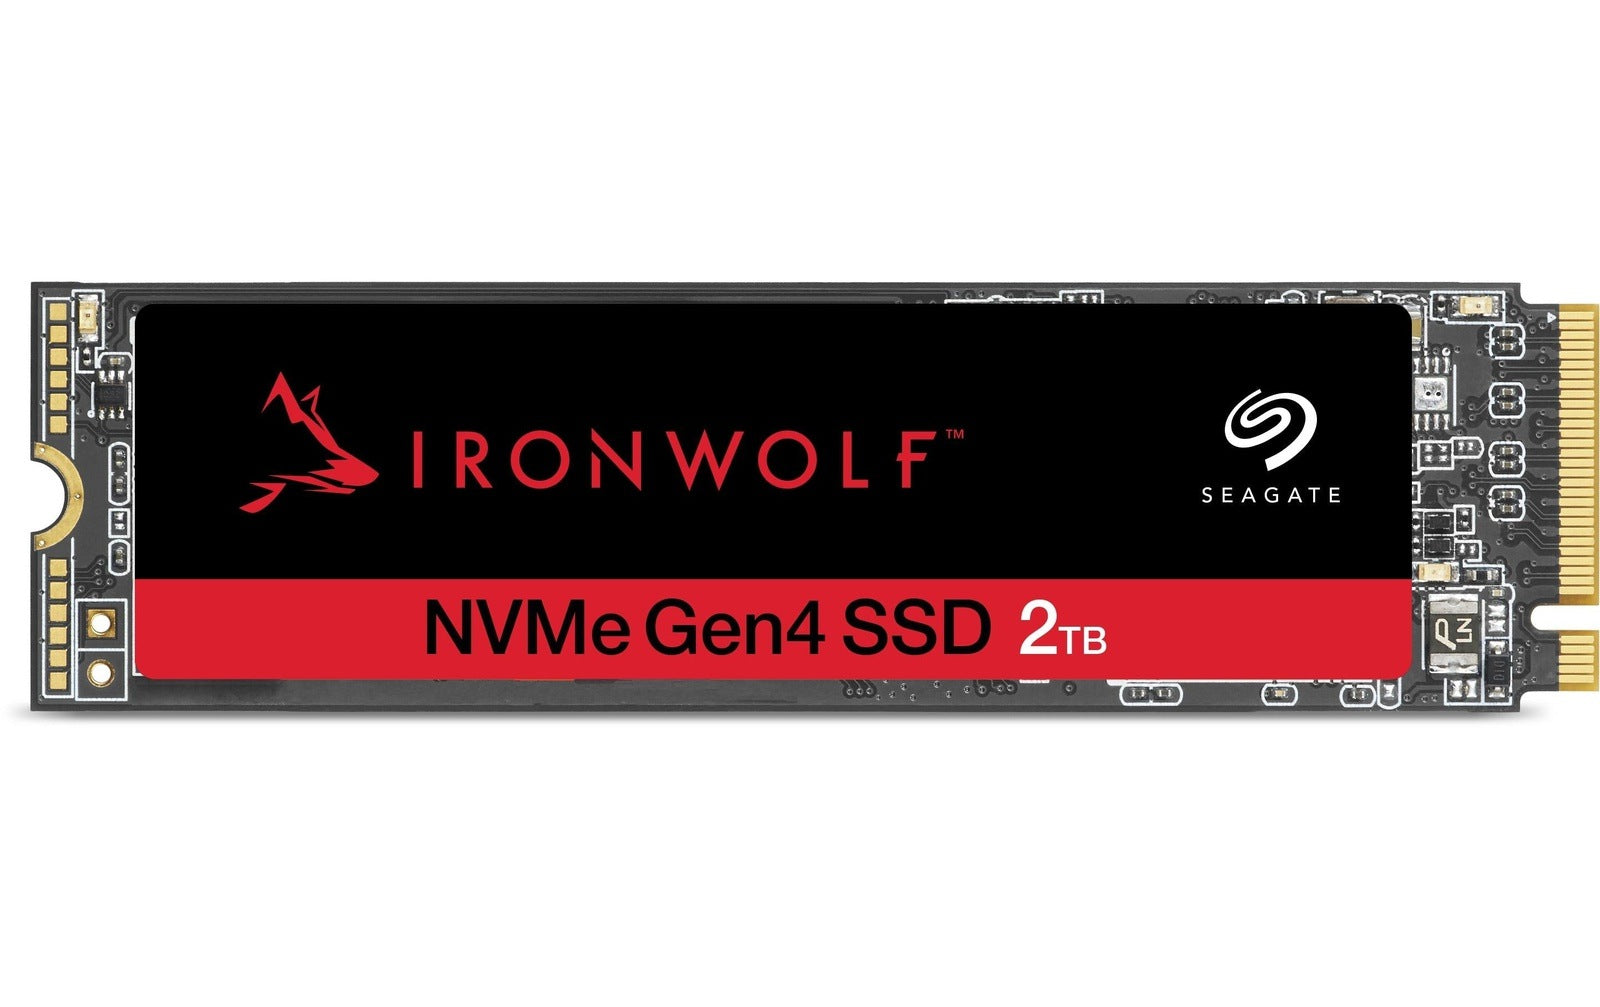 Seagate SSD IronWolf 525 M.2 2280 NVMe 2000 GB